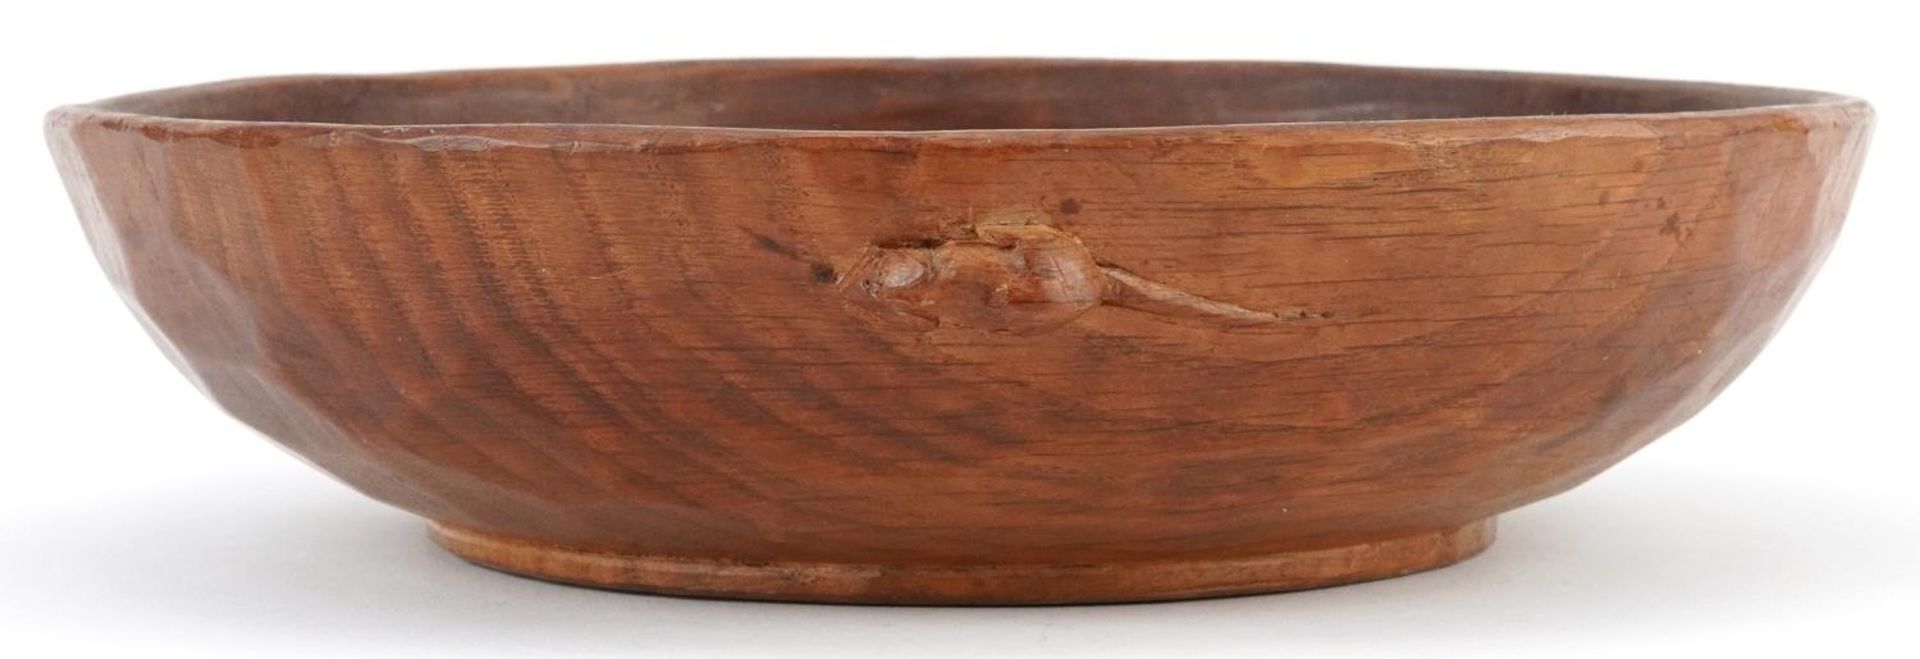 Robert Mouseman Thompson, adzed oak fruit bowl with signature mouse, 26cm in diameter